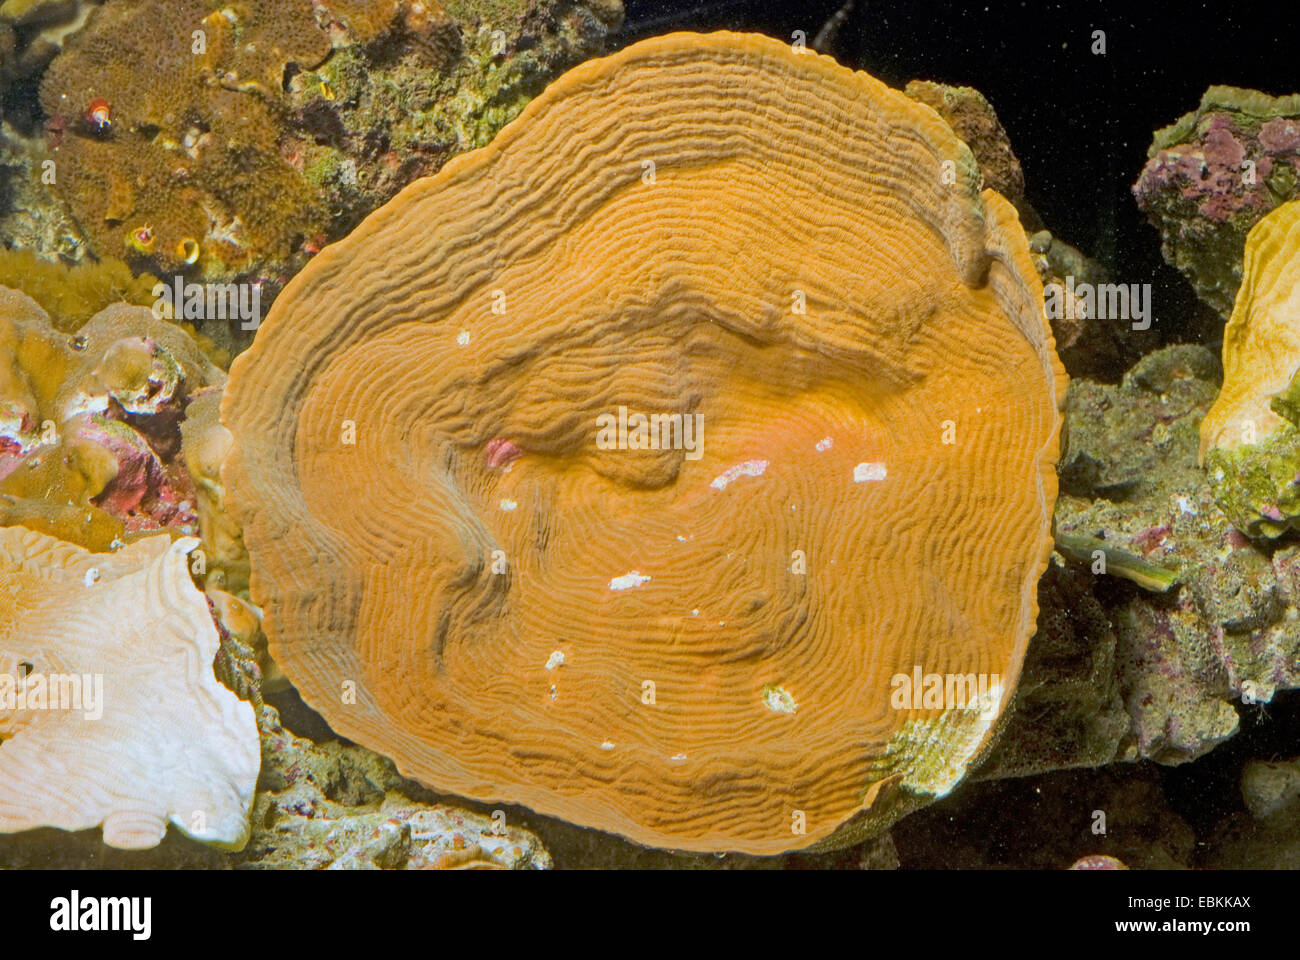 Stony coral (Pachyseris speciosa), high angle view Stock Photo